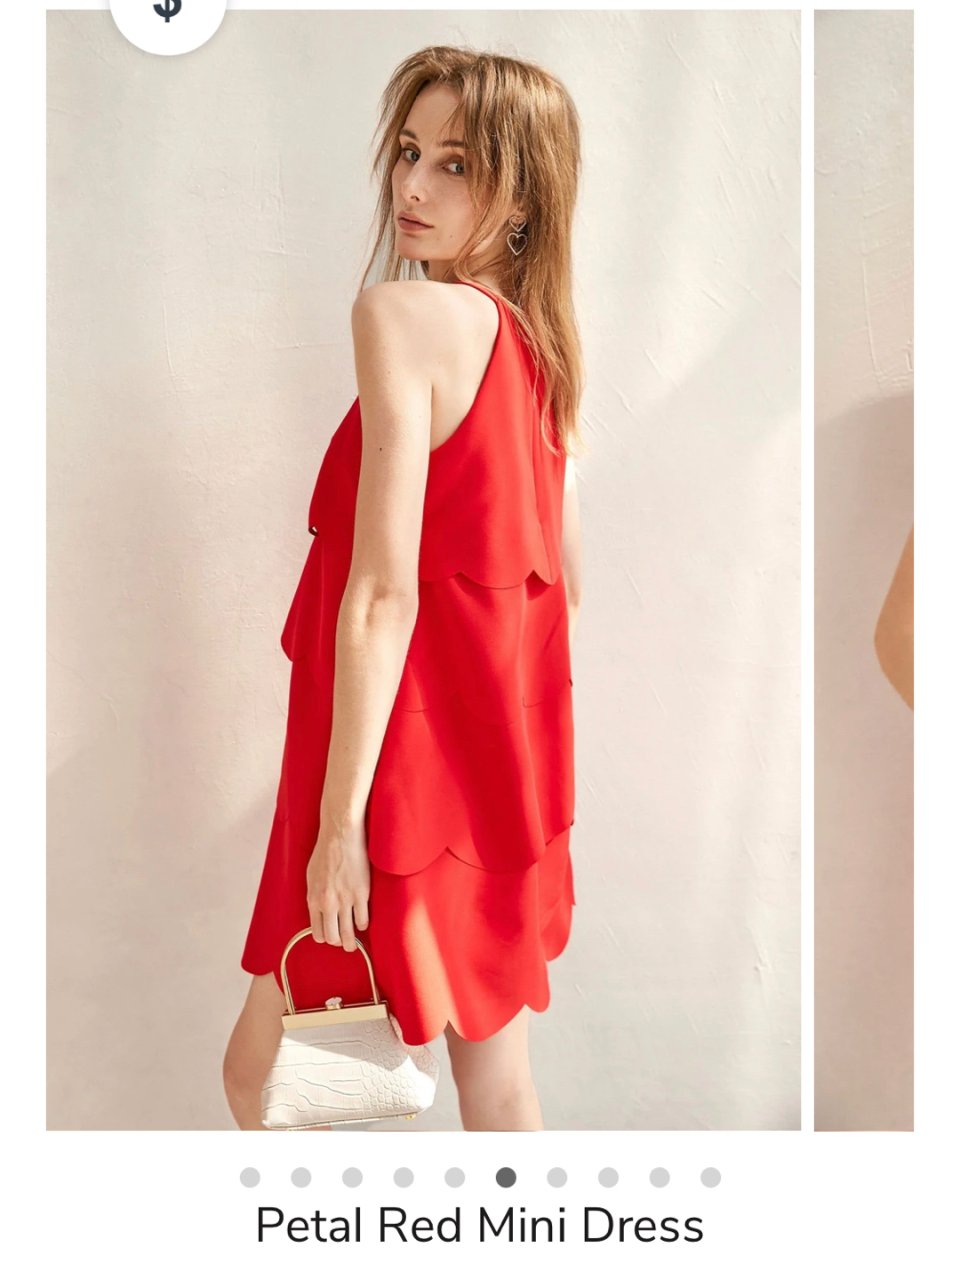 Red Petal Red Mini Dress | J.ING Women's Mini Dresses